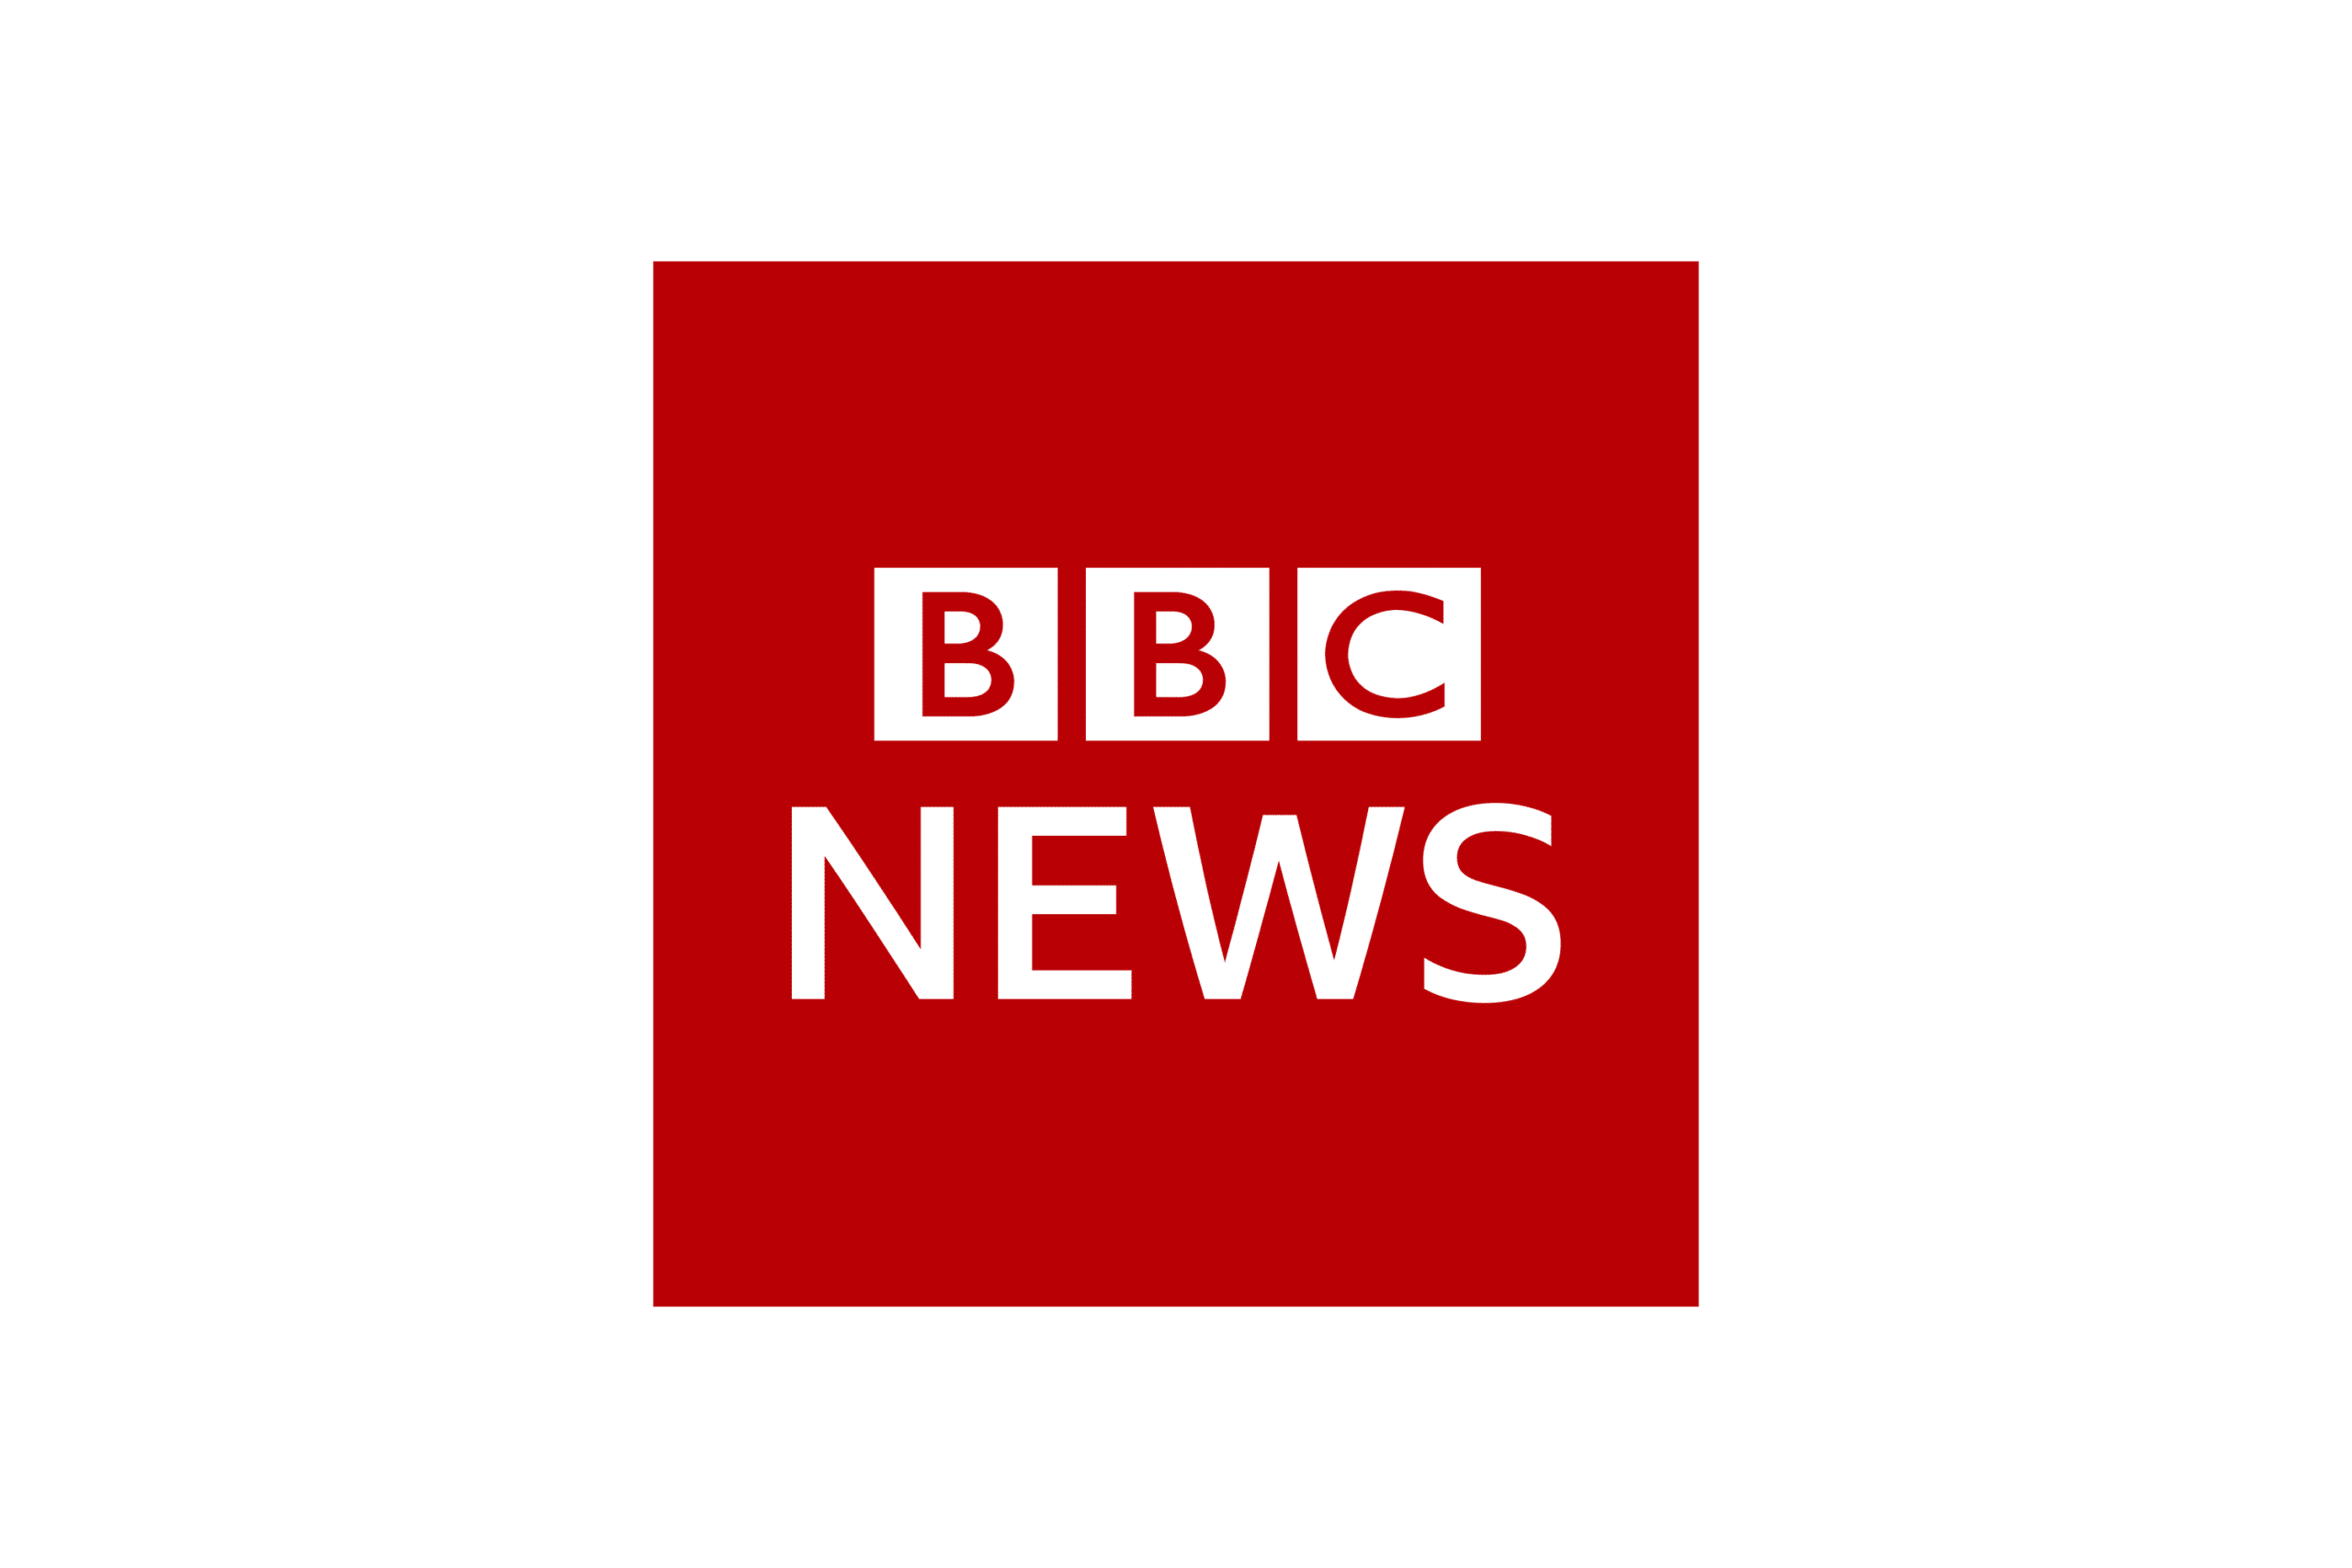 bbc news logo